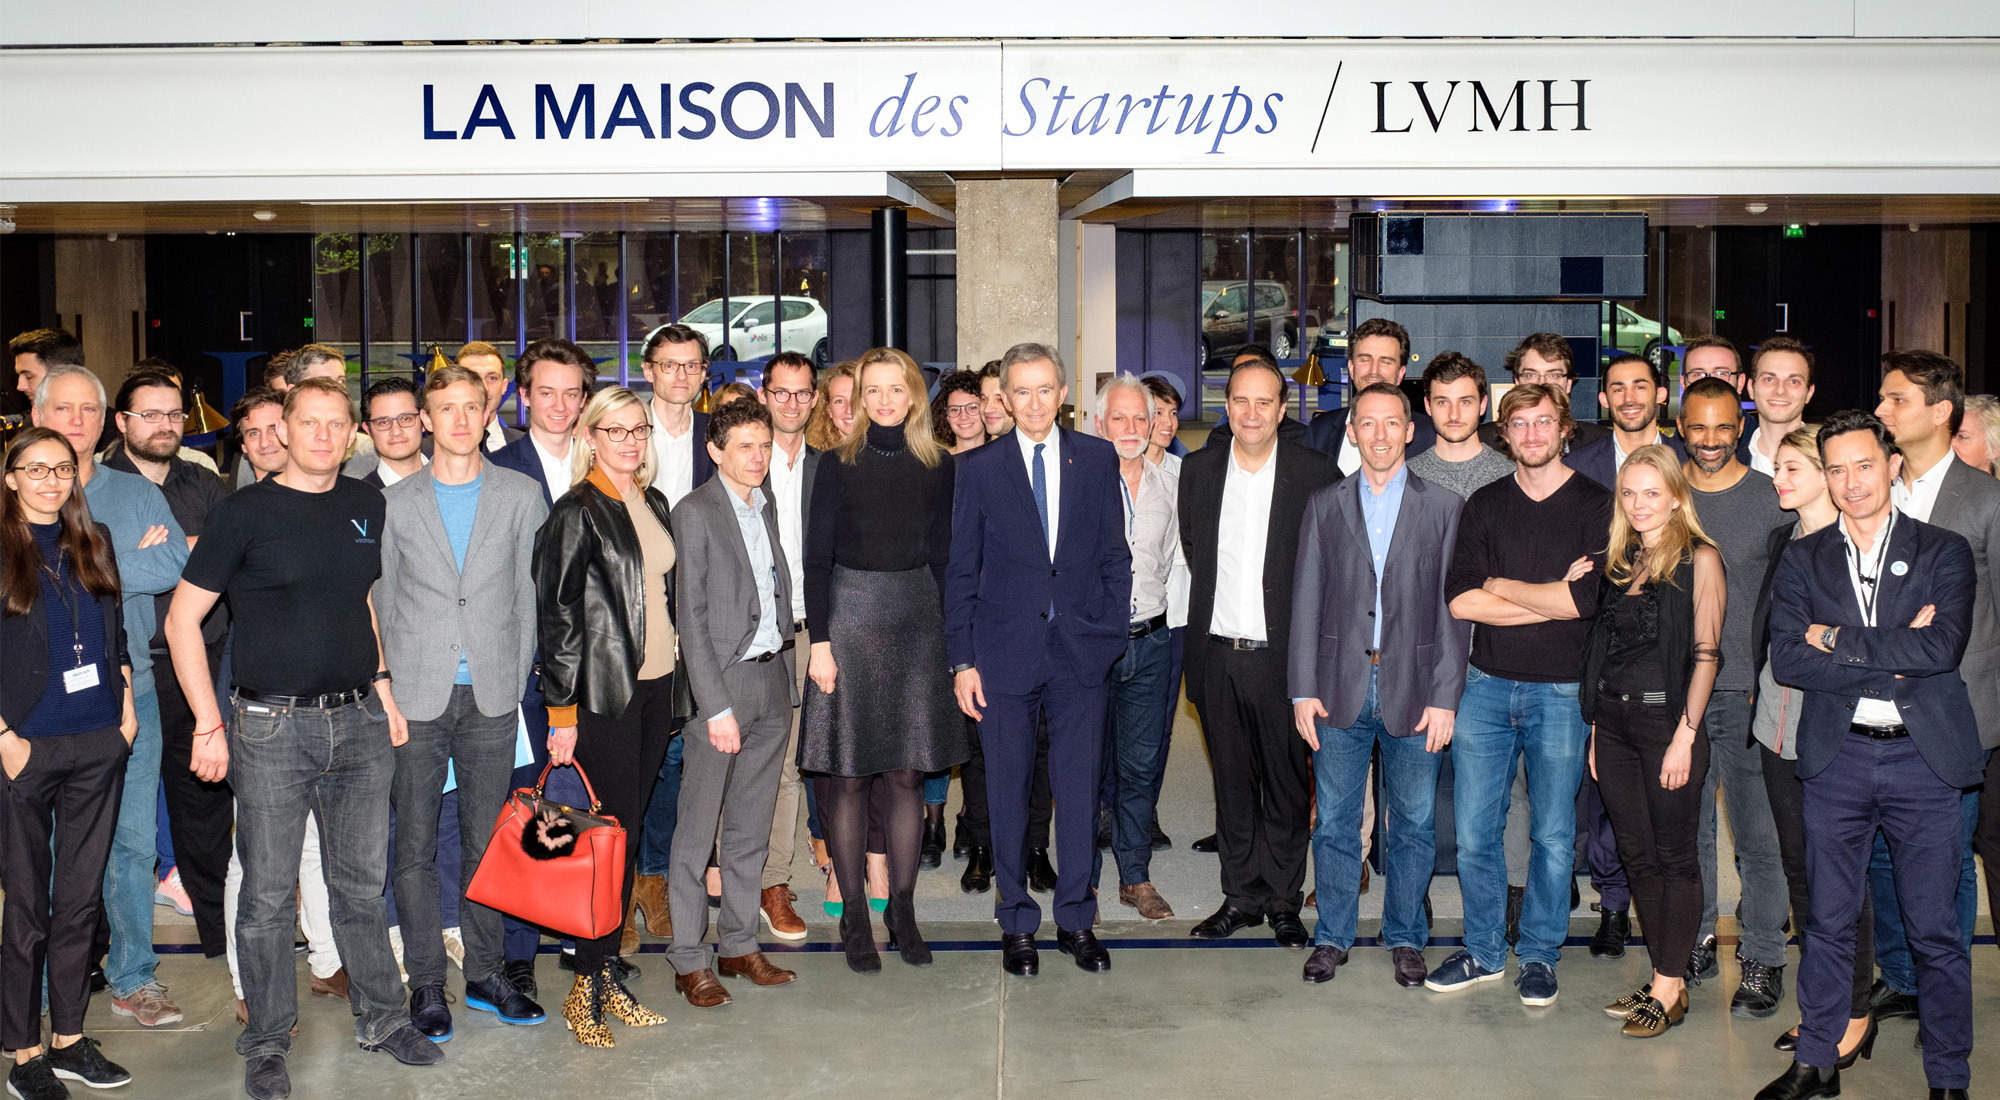 LVMH at STATION F: Discover la Maison des Startups LVMH 